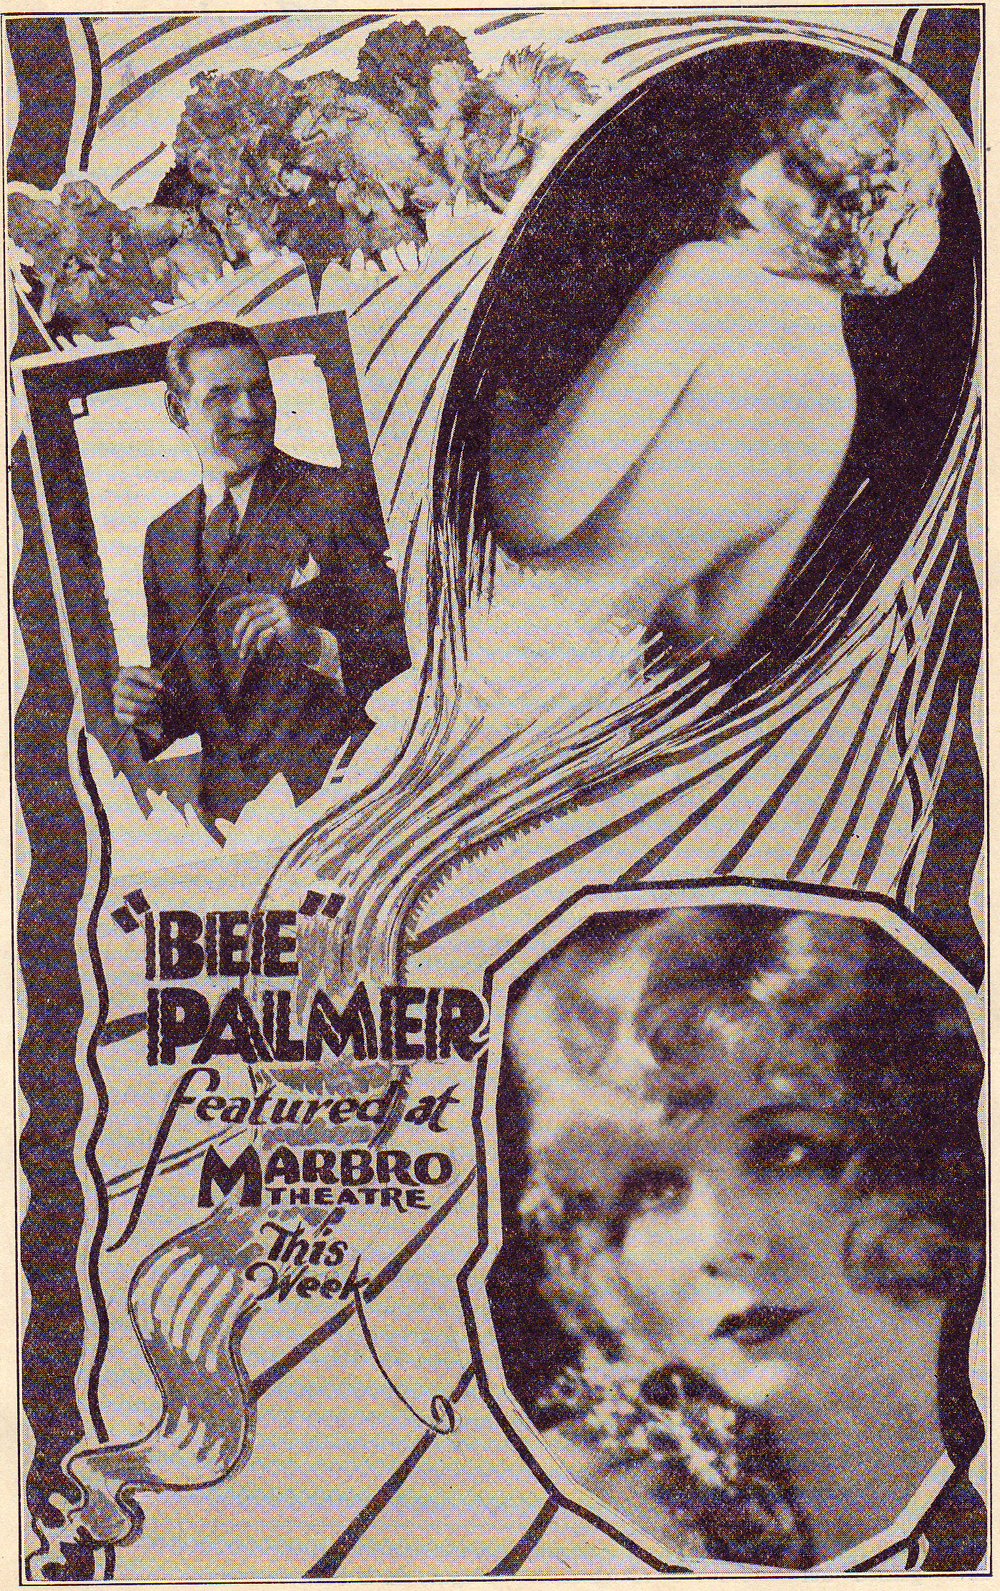 Marbro Theatre - Chicago - Feb 19, 1928